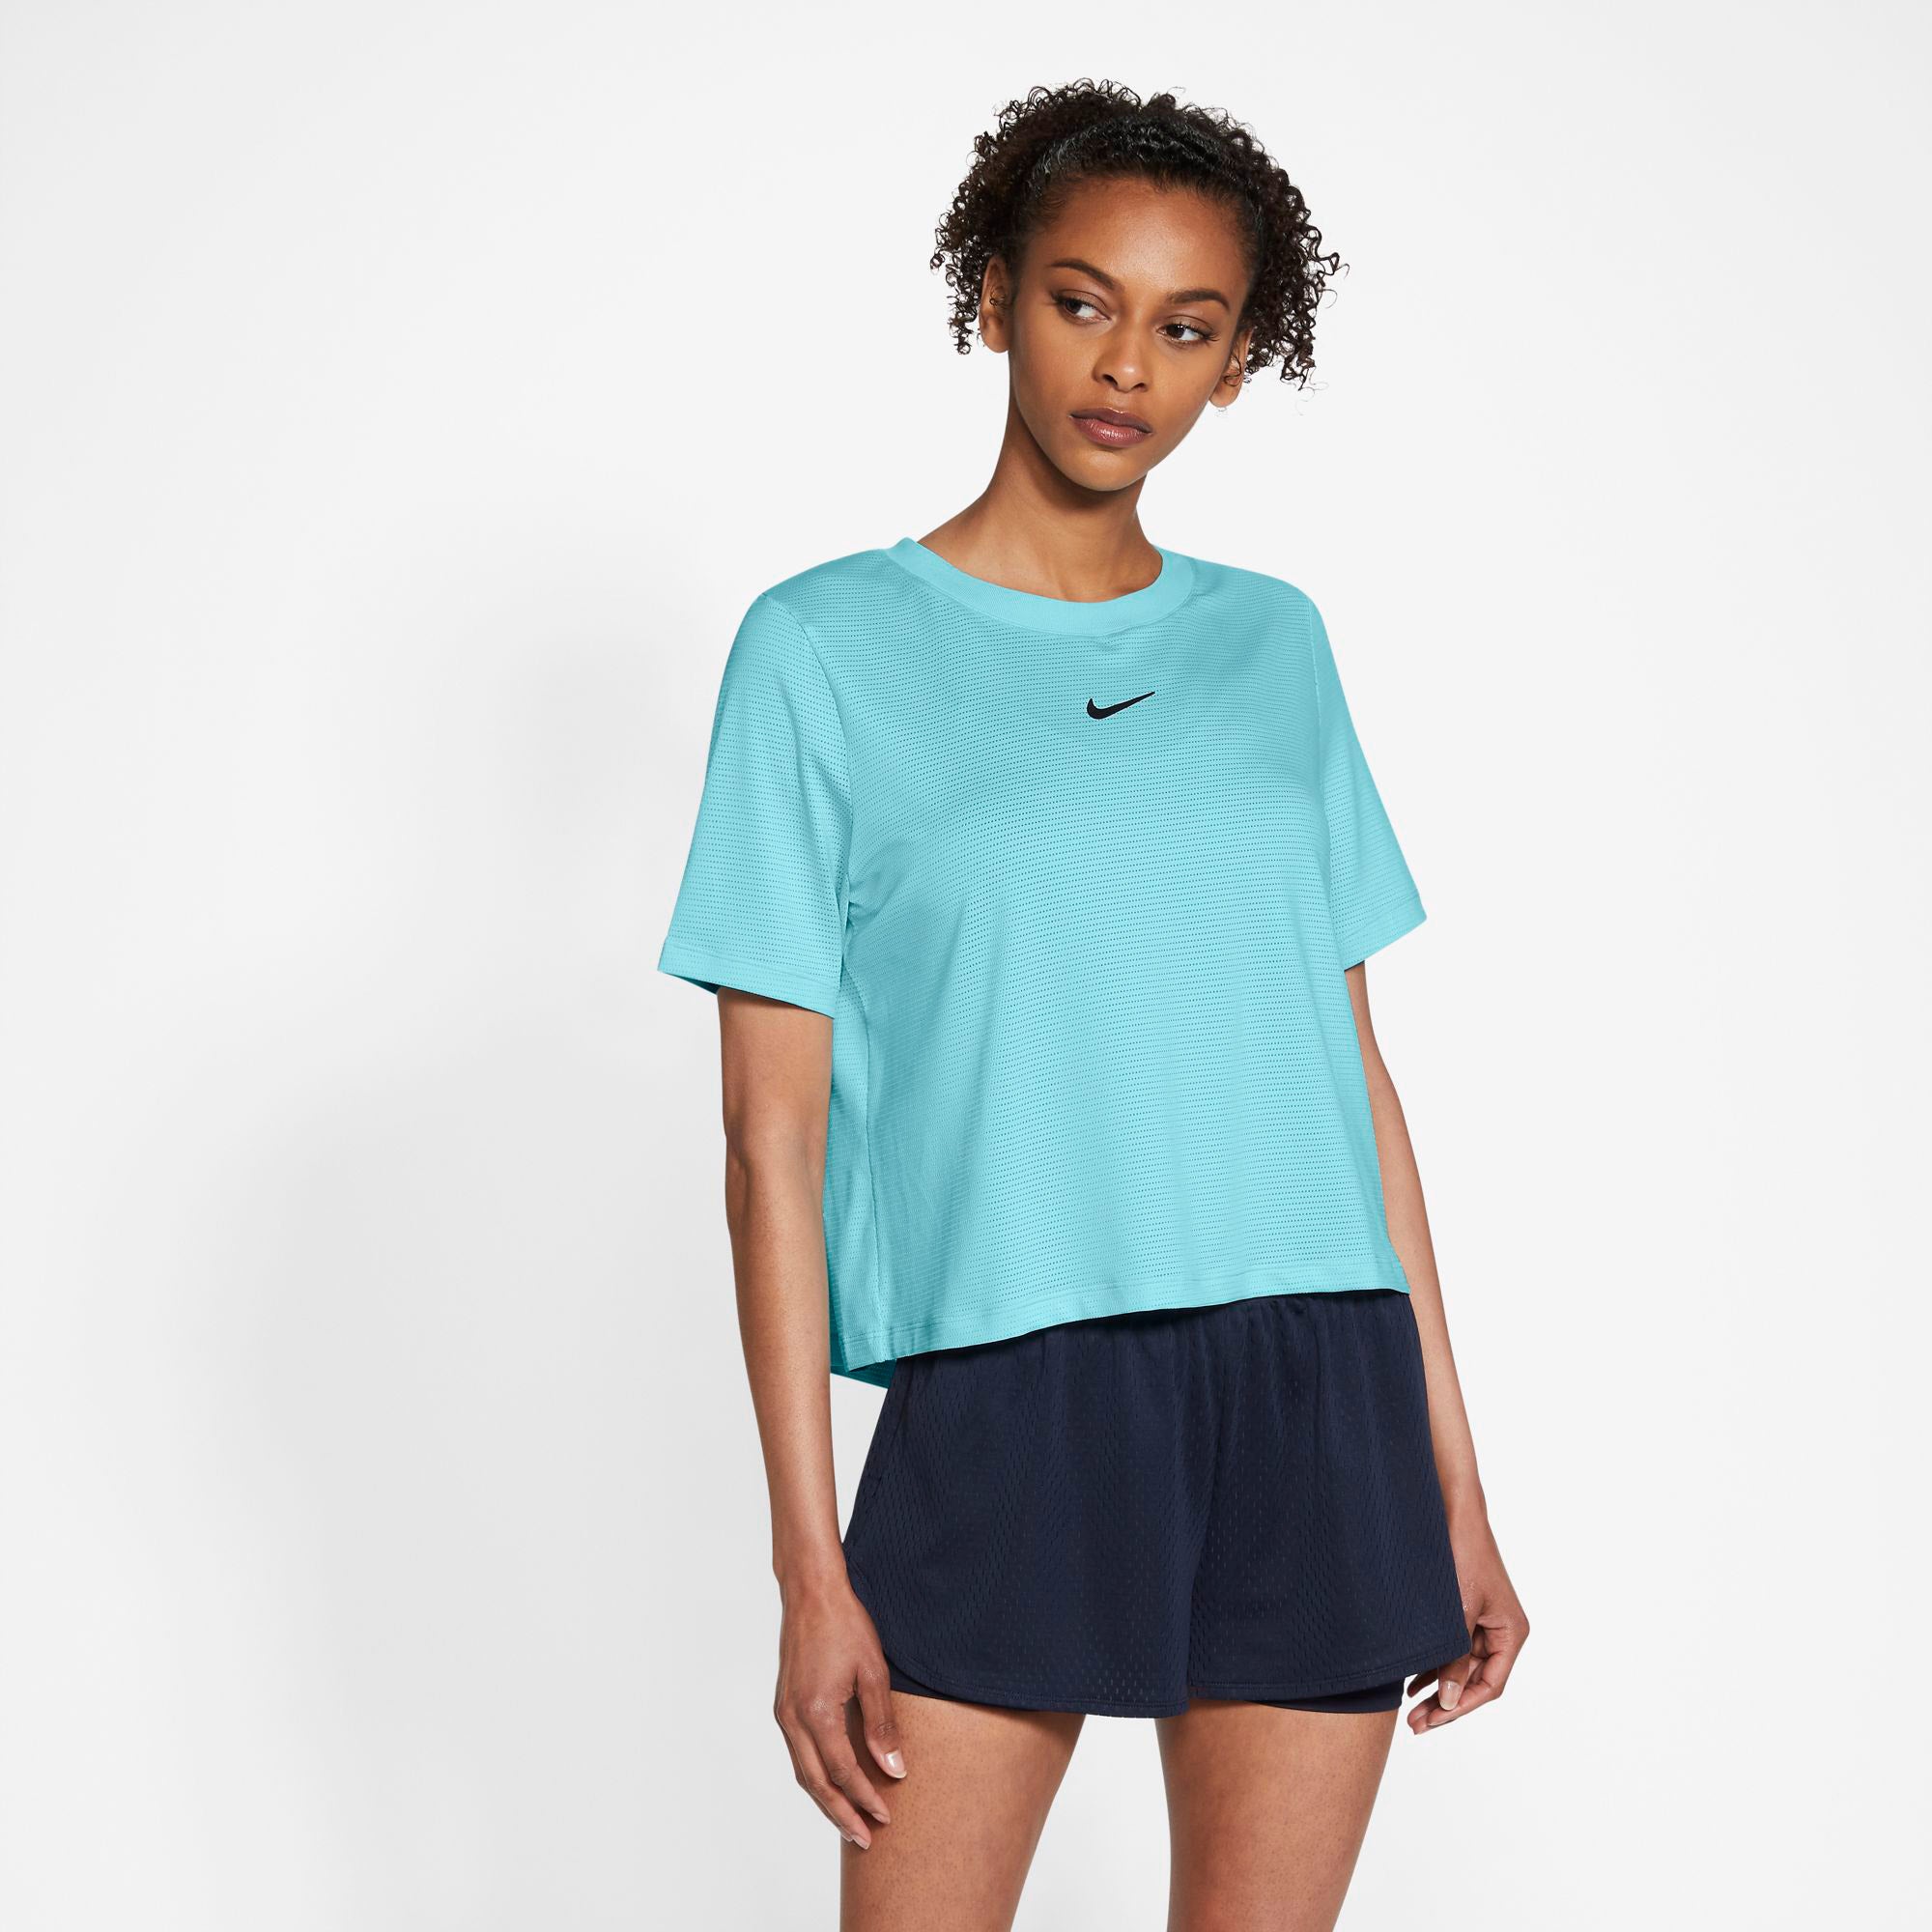 Nike Dri-Fit Advantage Women's Tennis Shirt Blue (1)